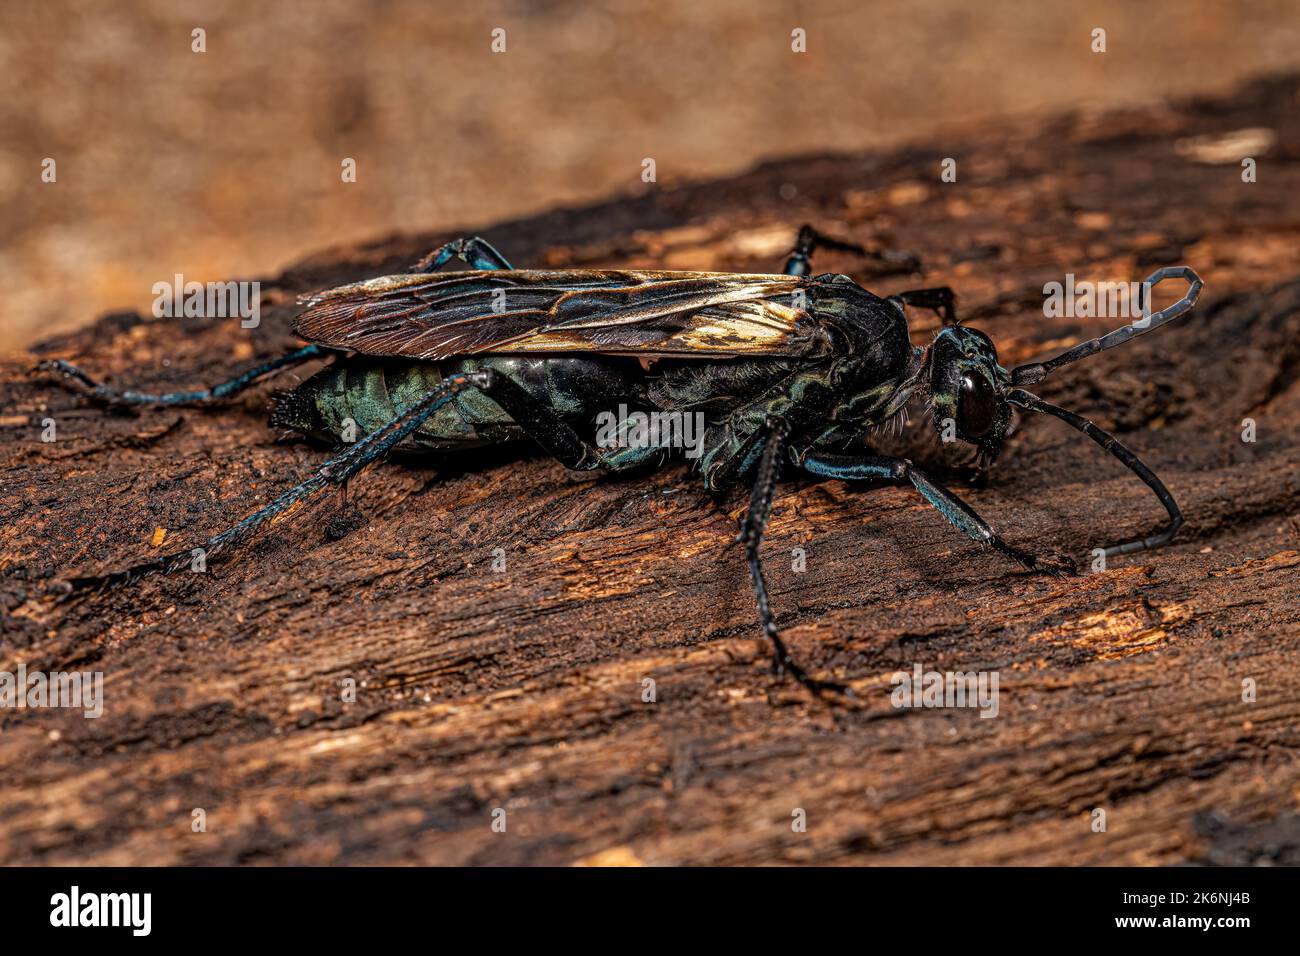 Adult Tarantula hawk Wasp of the Genus Pepsis Stock Photo